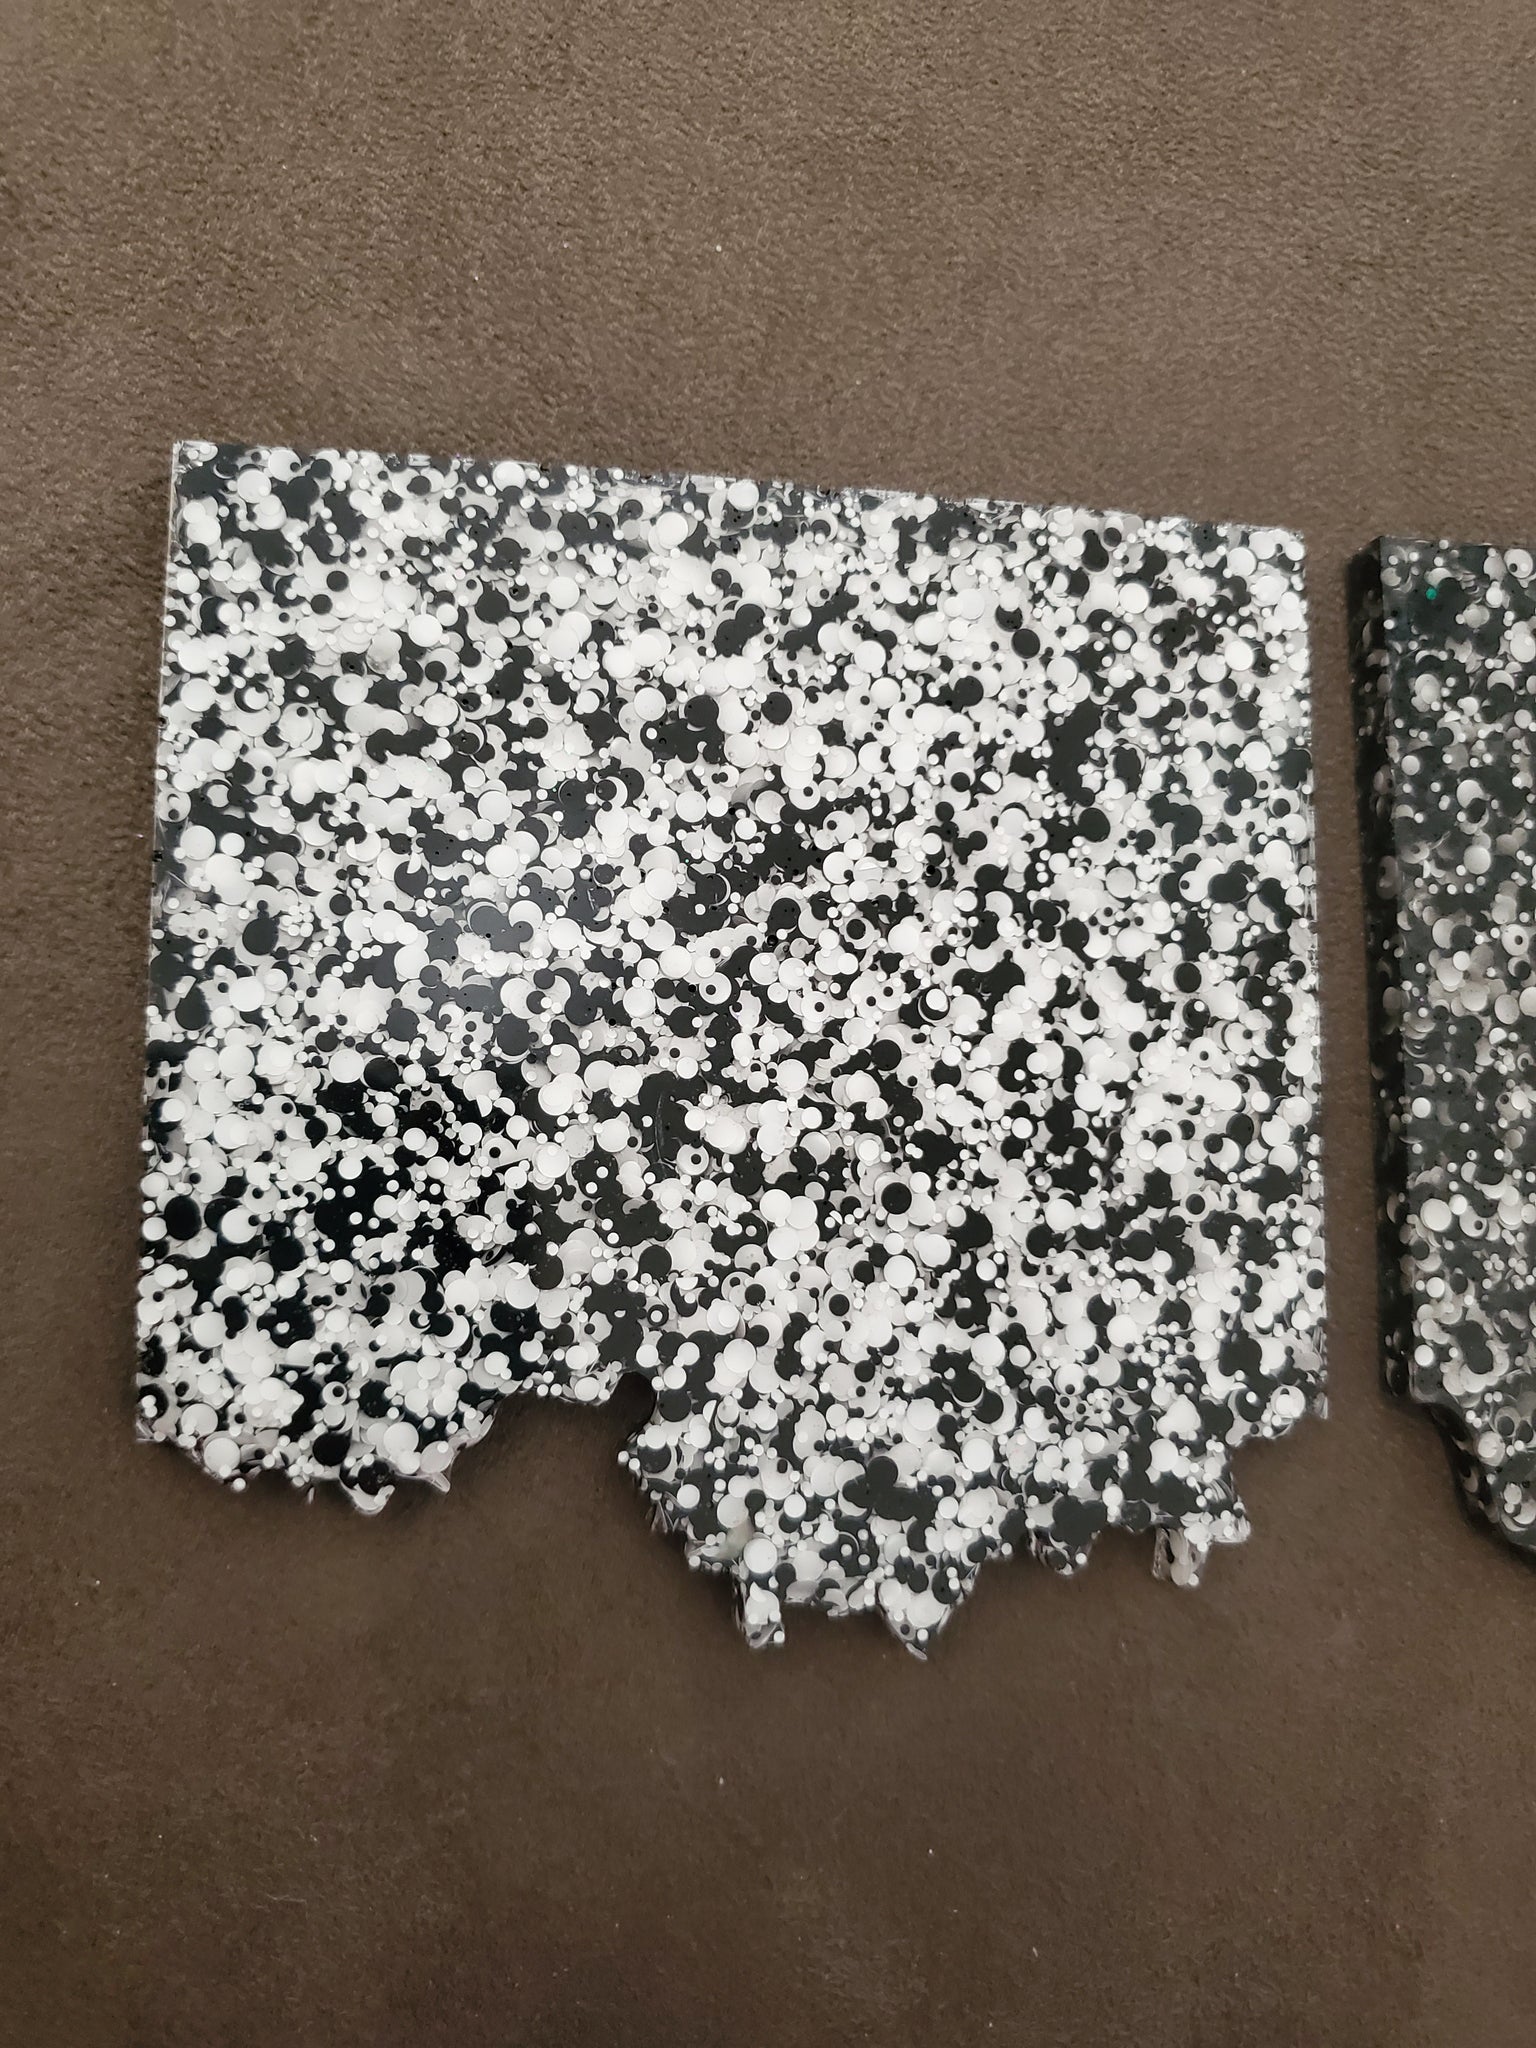 Handmade Resin Speckled Black/White 2pack Coasters